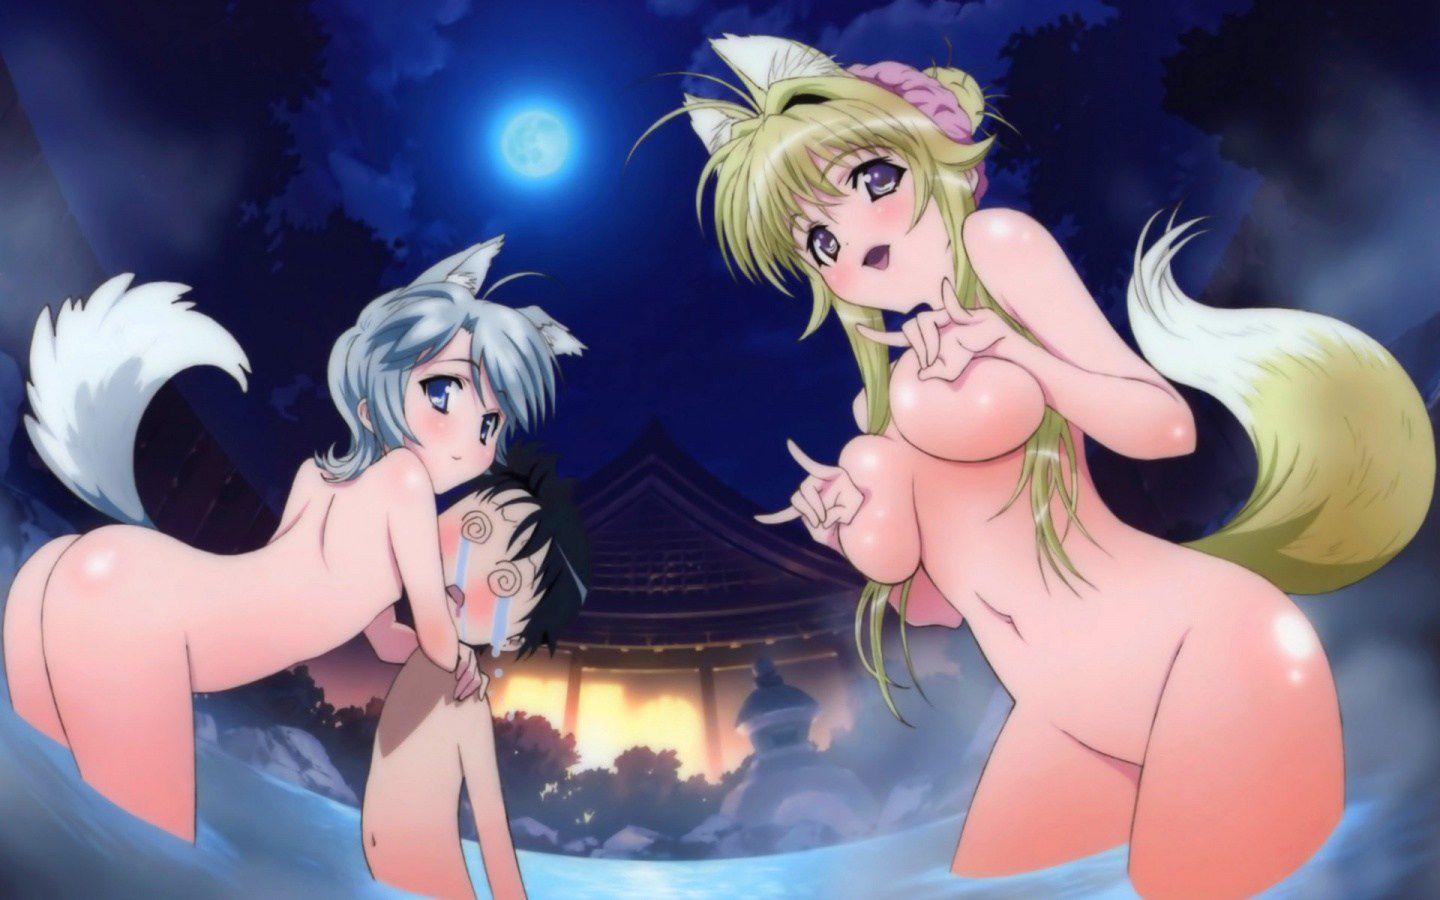 [Kanokon] Source Chizuru-chan and heroine erotic images part3 29